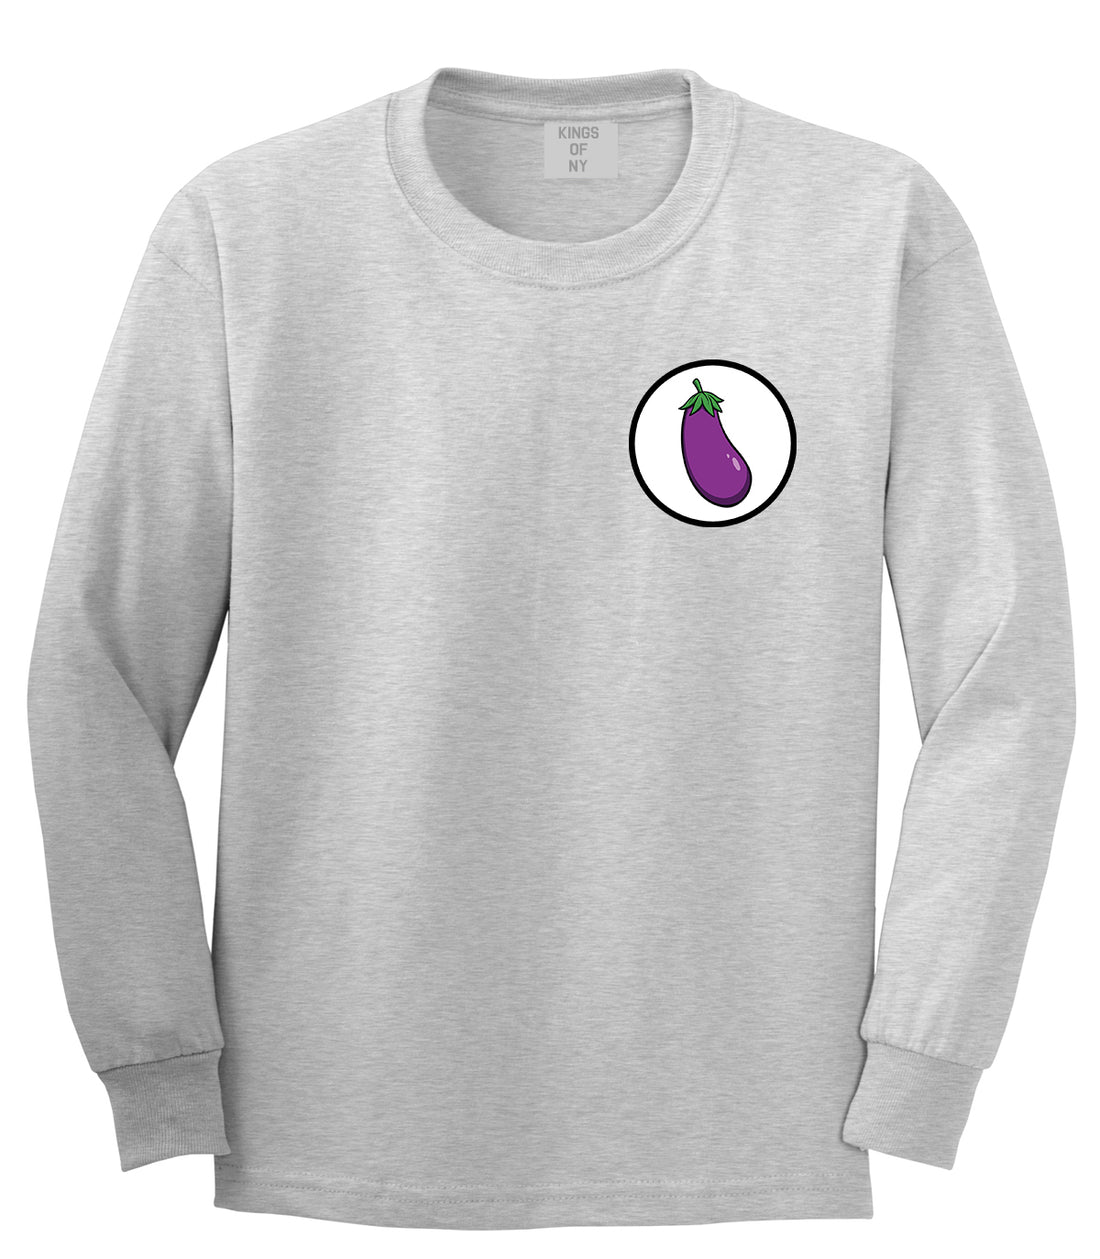 Eggplant Emoji Chest Mens Grey Long Sleeve T-Shirt by Kings Of NY